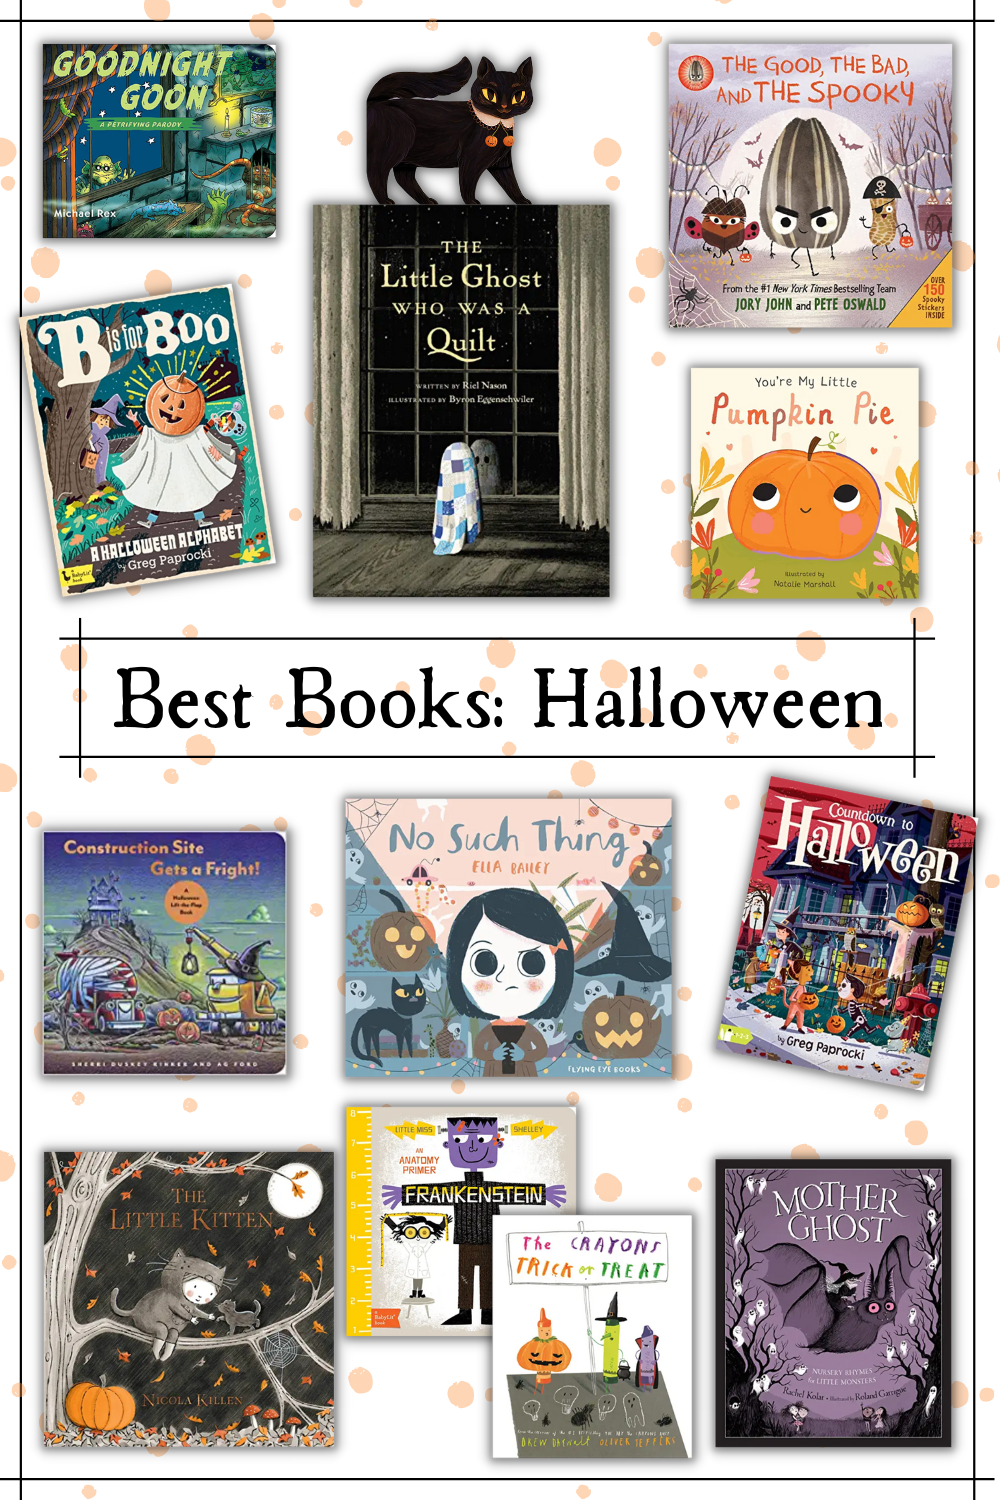 Halloween books for kids.